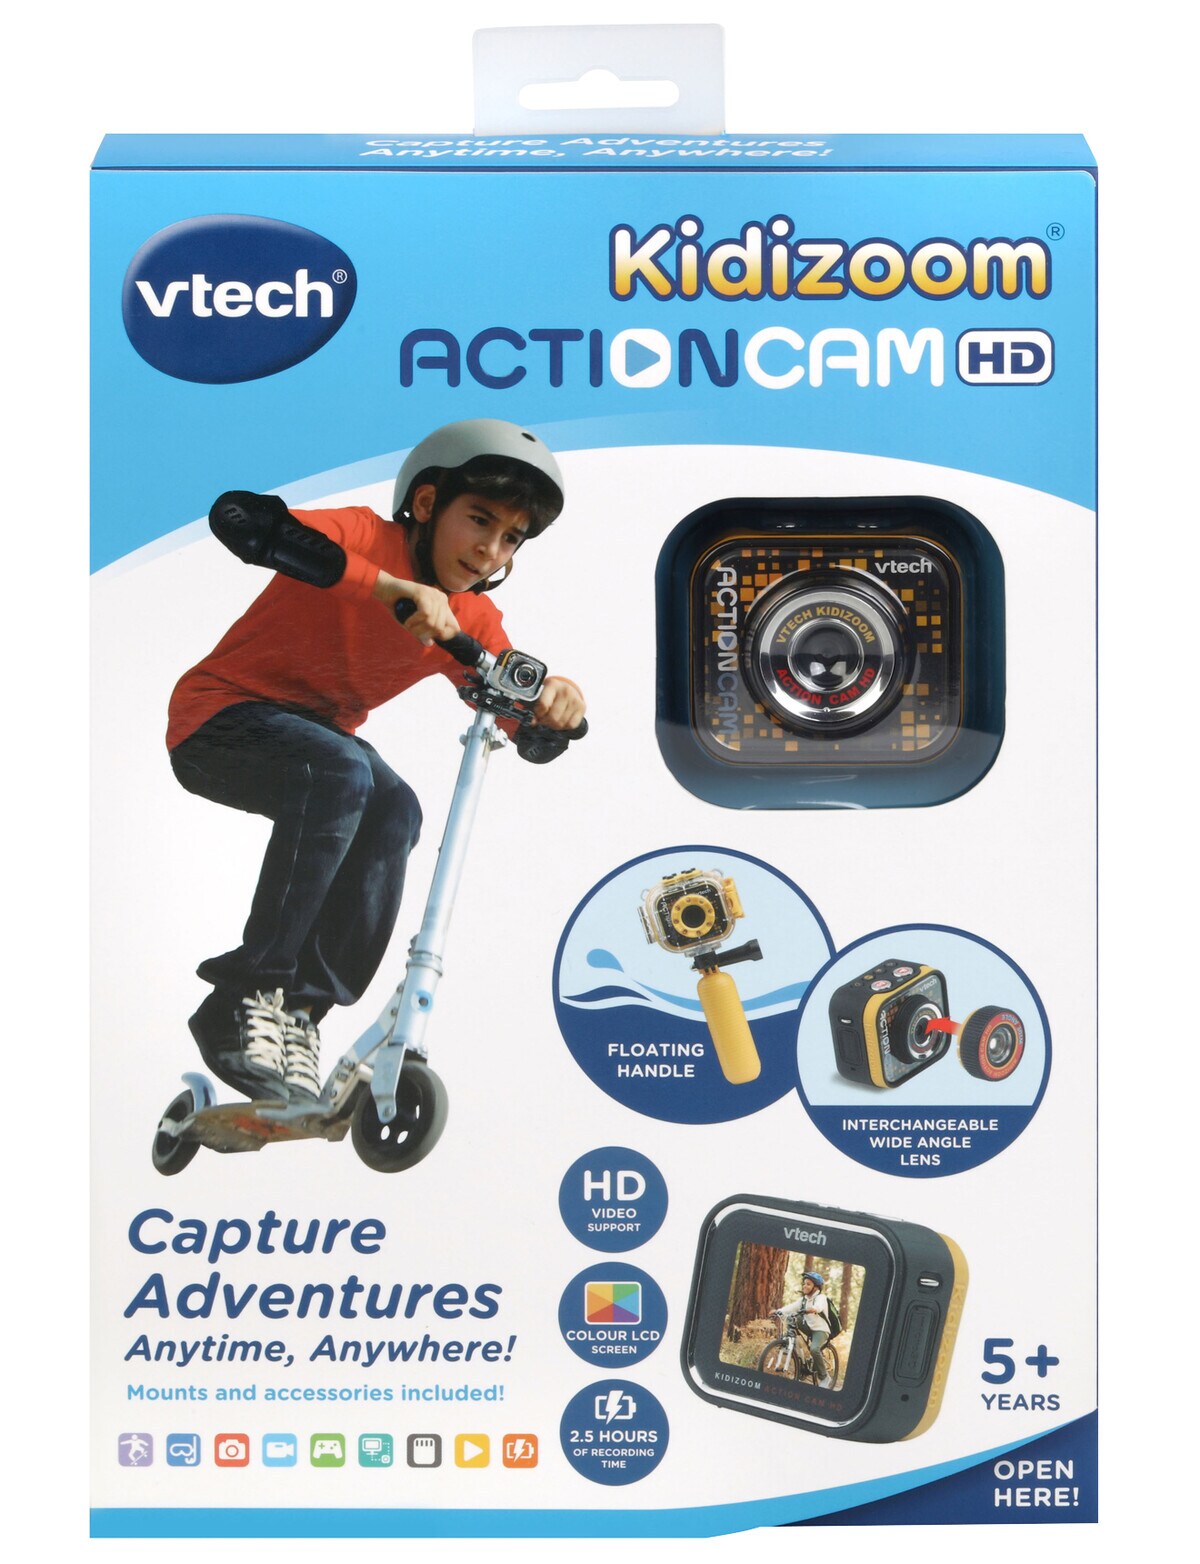 VTech KidiZoom Action Cam HD